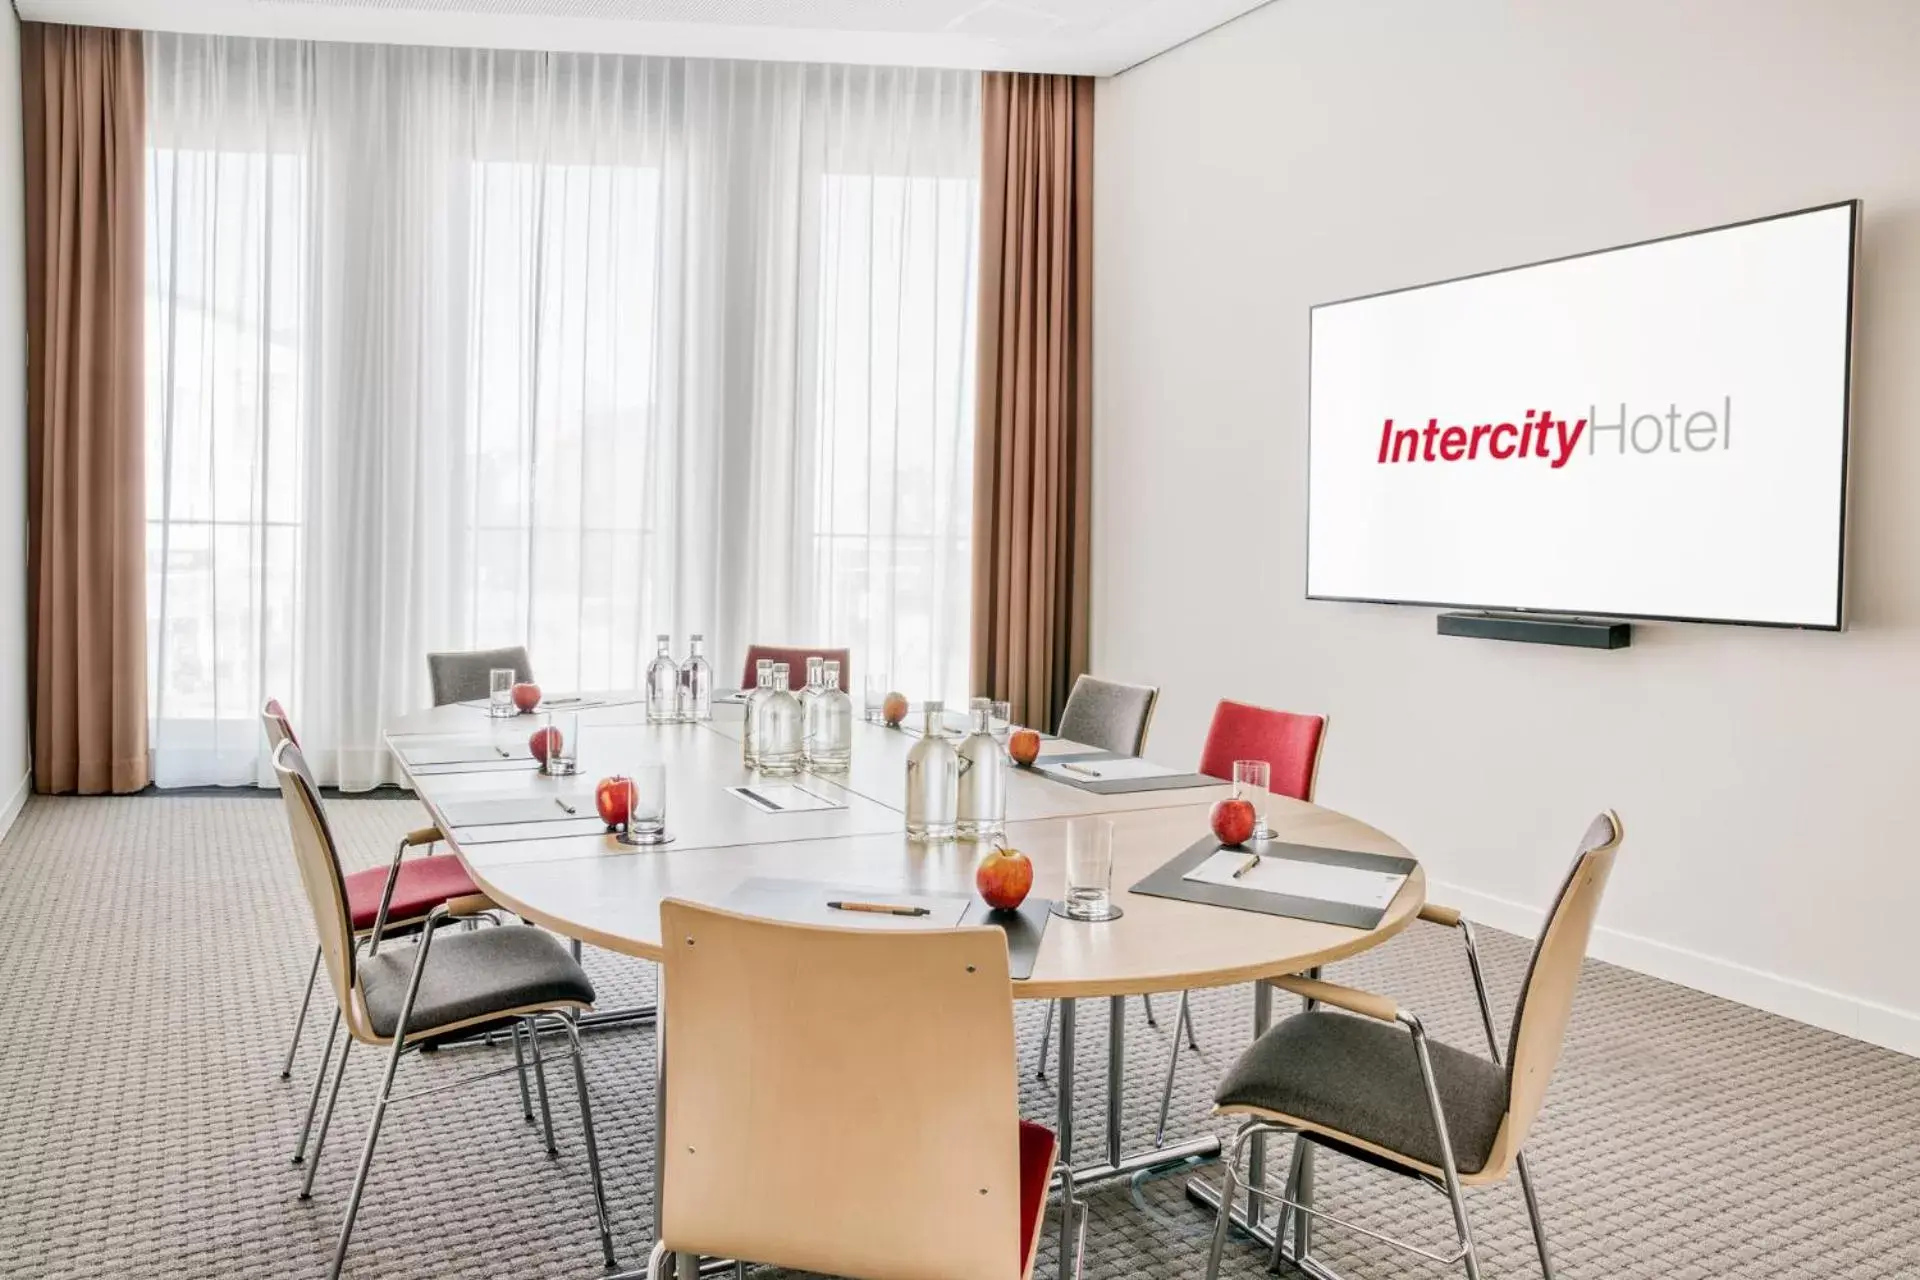 Meeting/conference room in IntercityHotel Hamburg-Barmbek